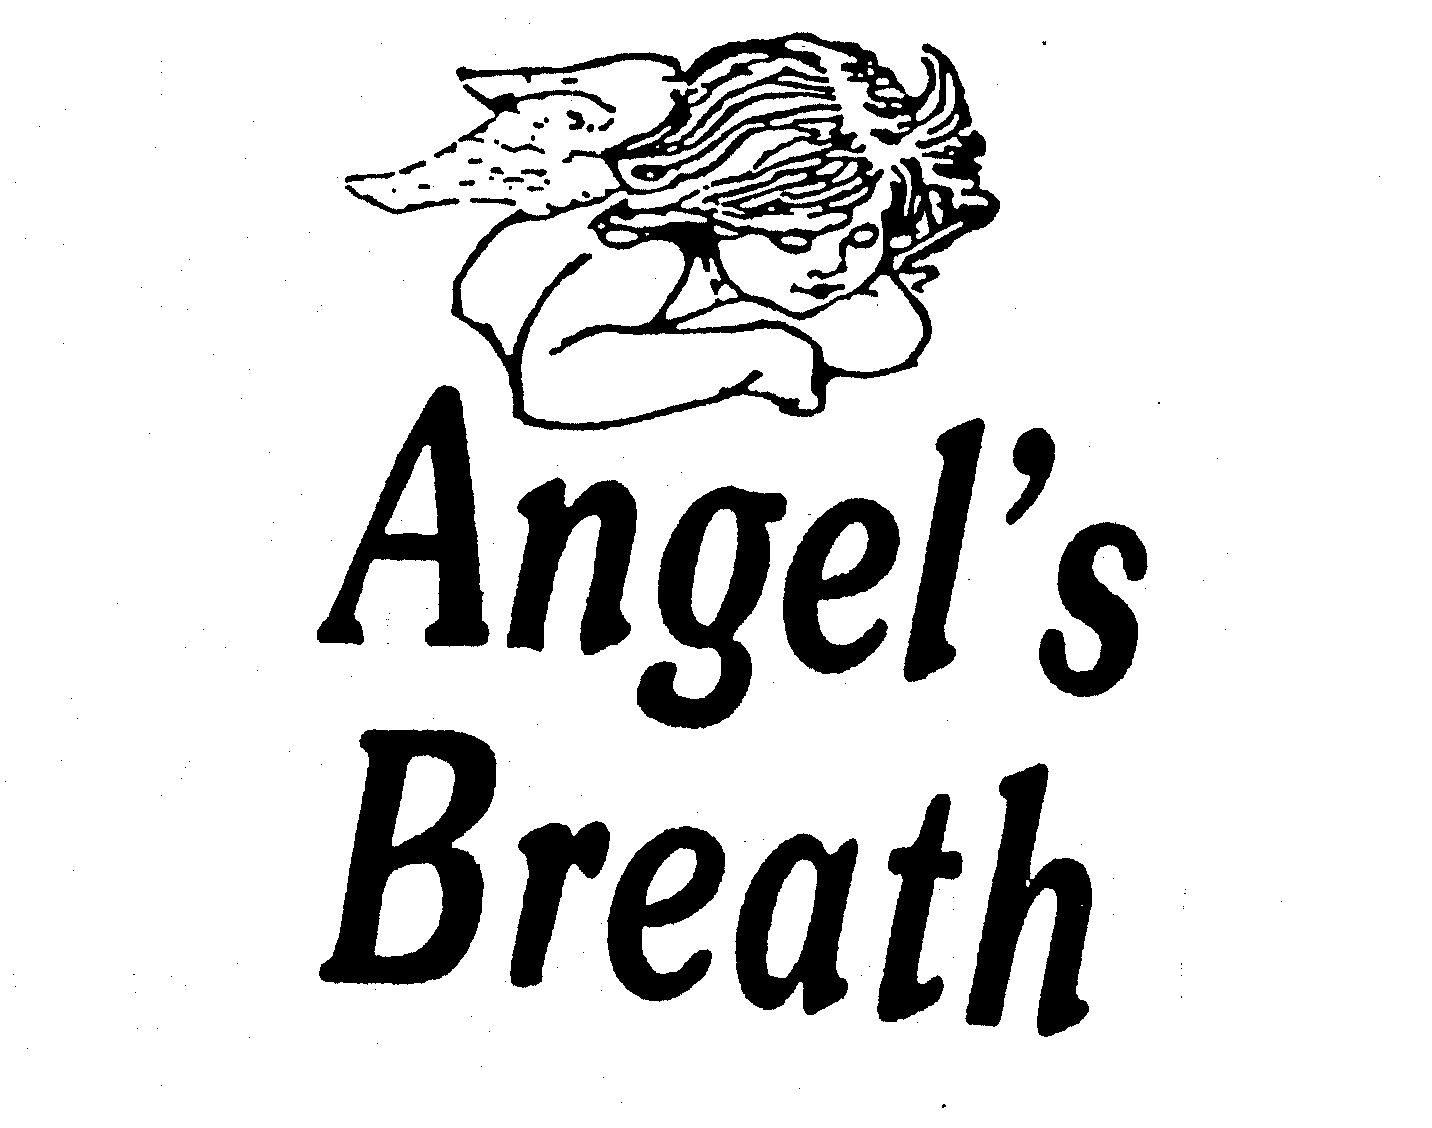 ANGEL'S BREATH